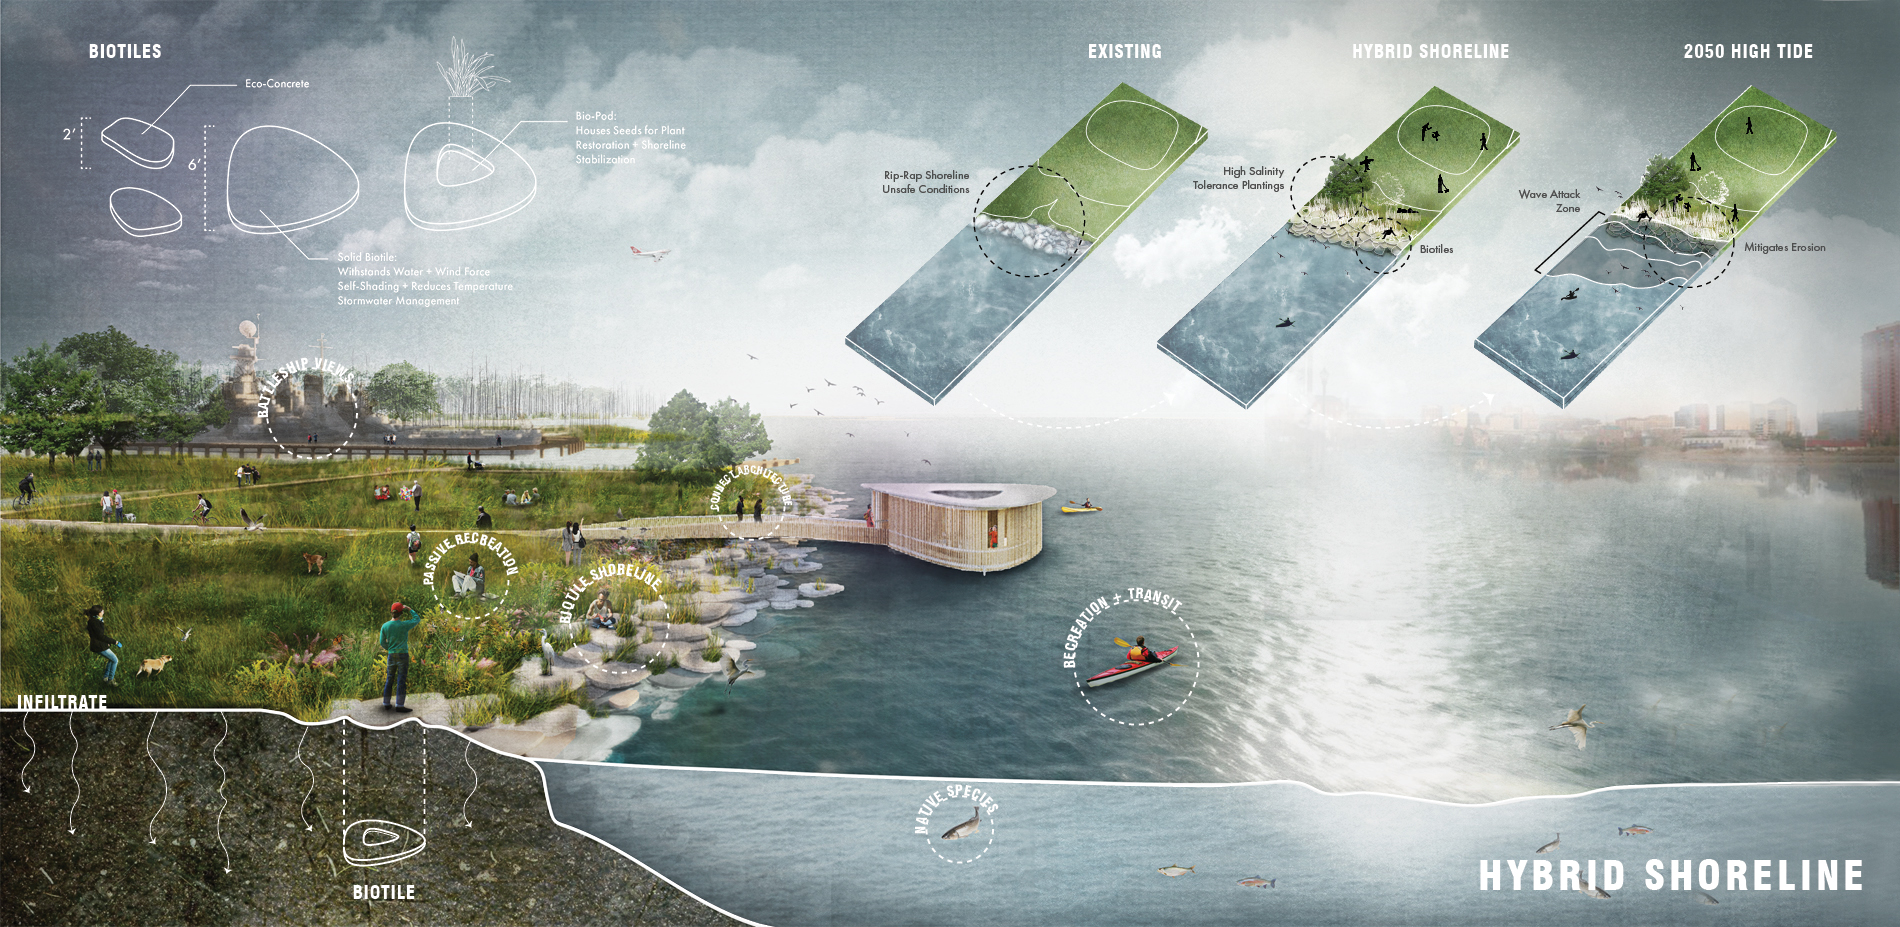 Hybrid Shoreline: Instilling Engagement and Biodiversity